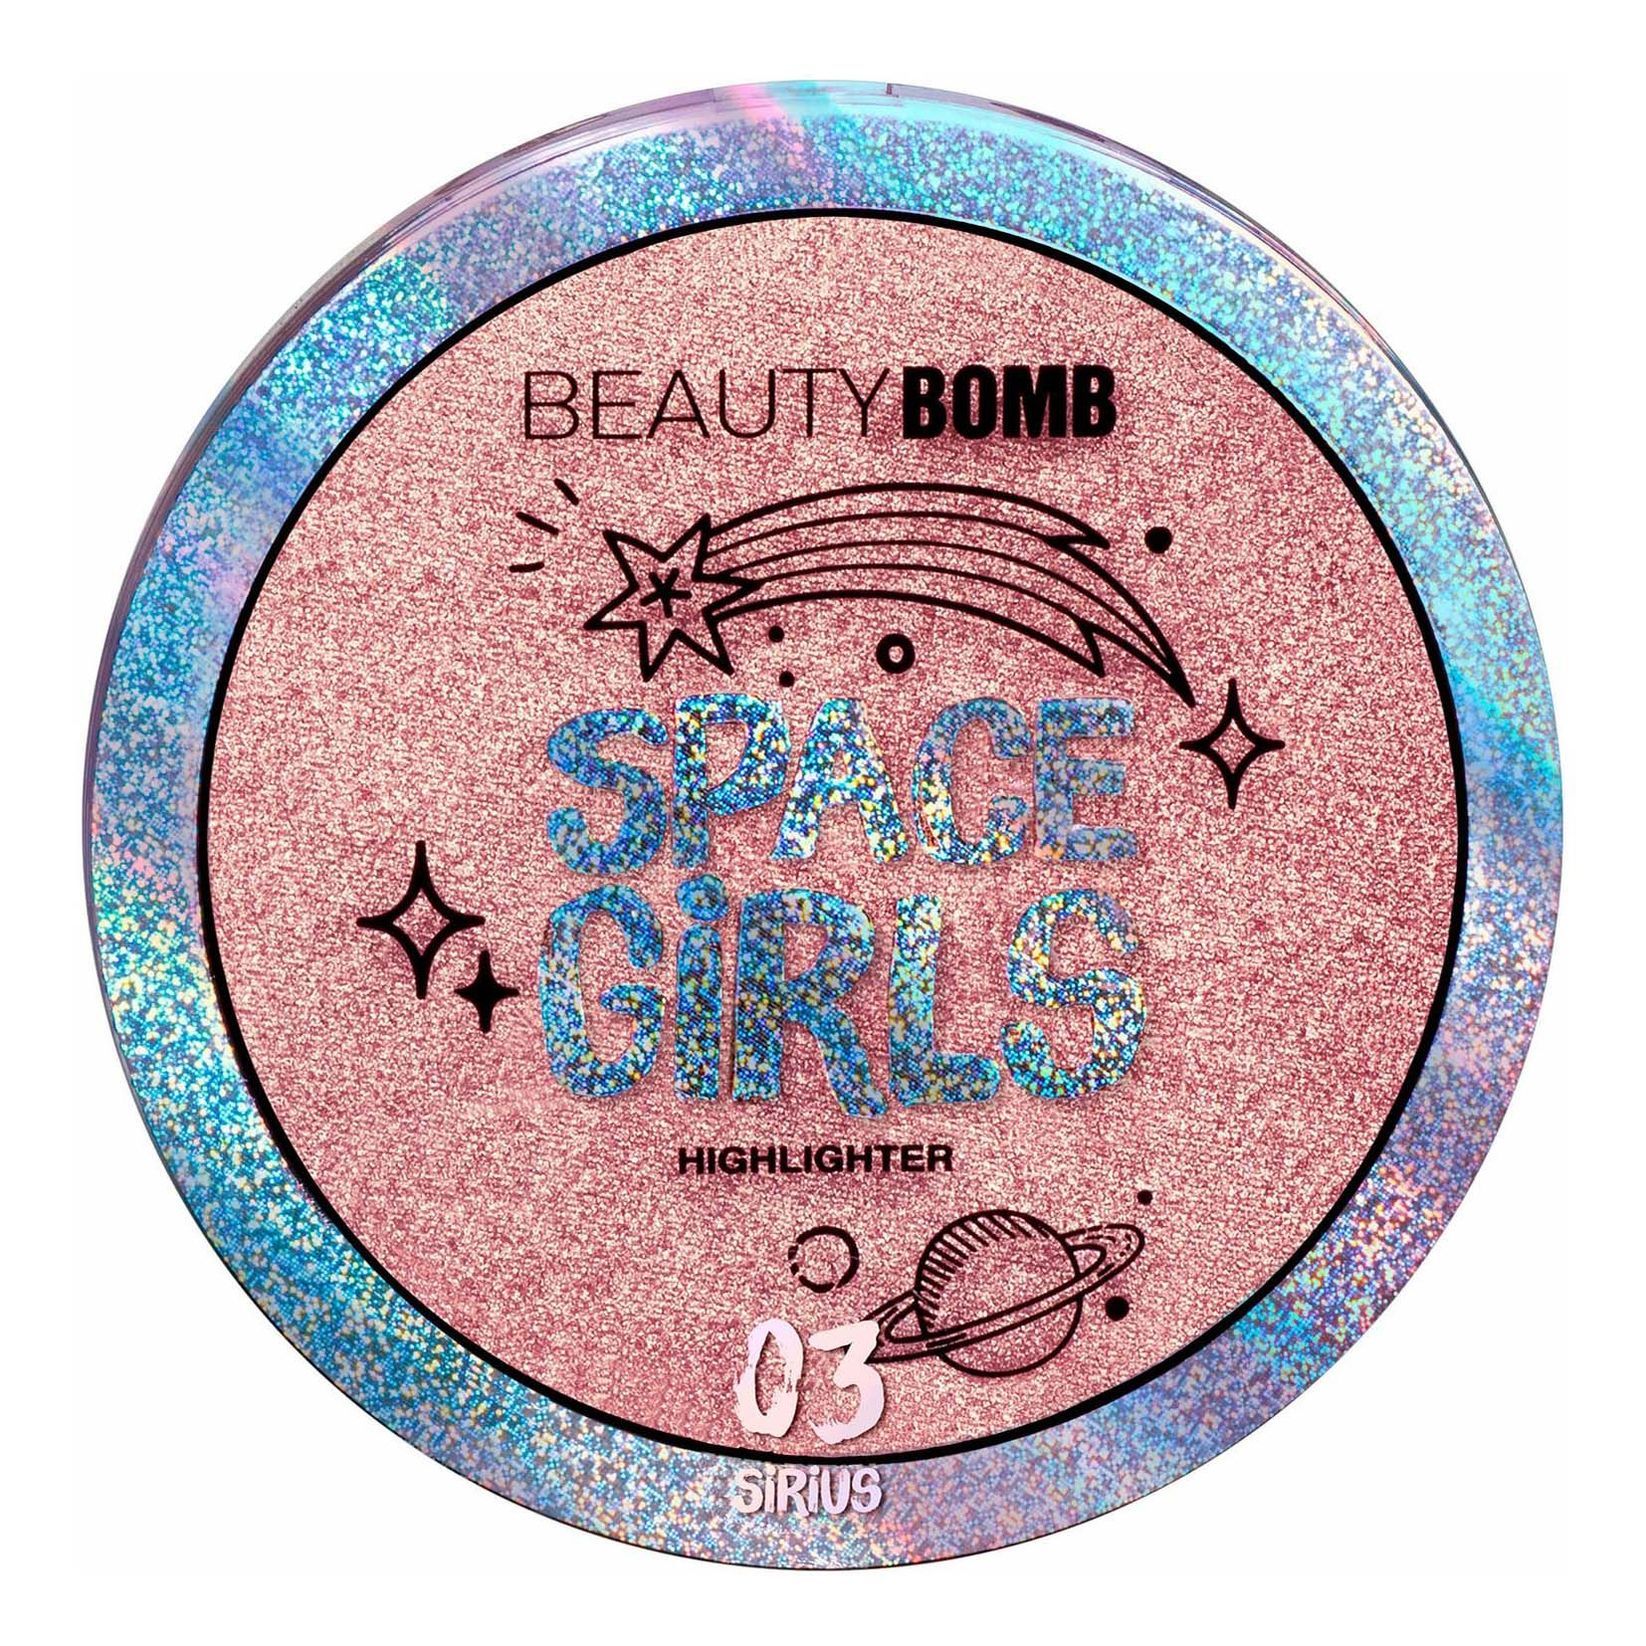 Хайлайтер bomb. Хайлайтер Beauty Bomb. Beauty Bomb хайлайтер Space girls т02. Хайлайтер Бьюти бомб яблоко. Luma Stix Highlighter Beauty Bomb.